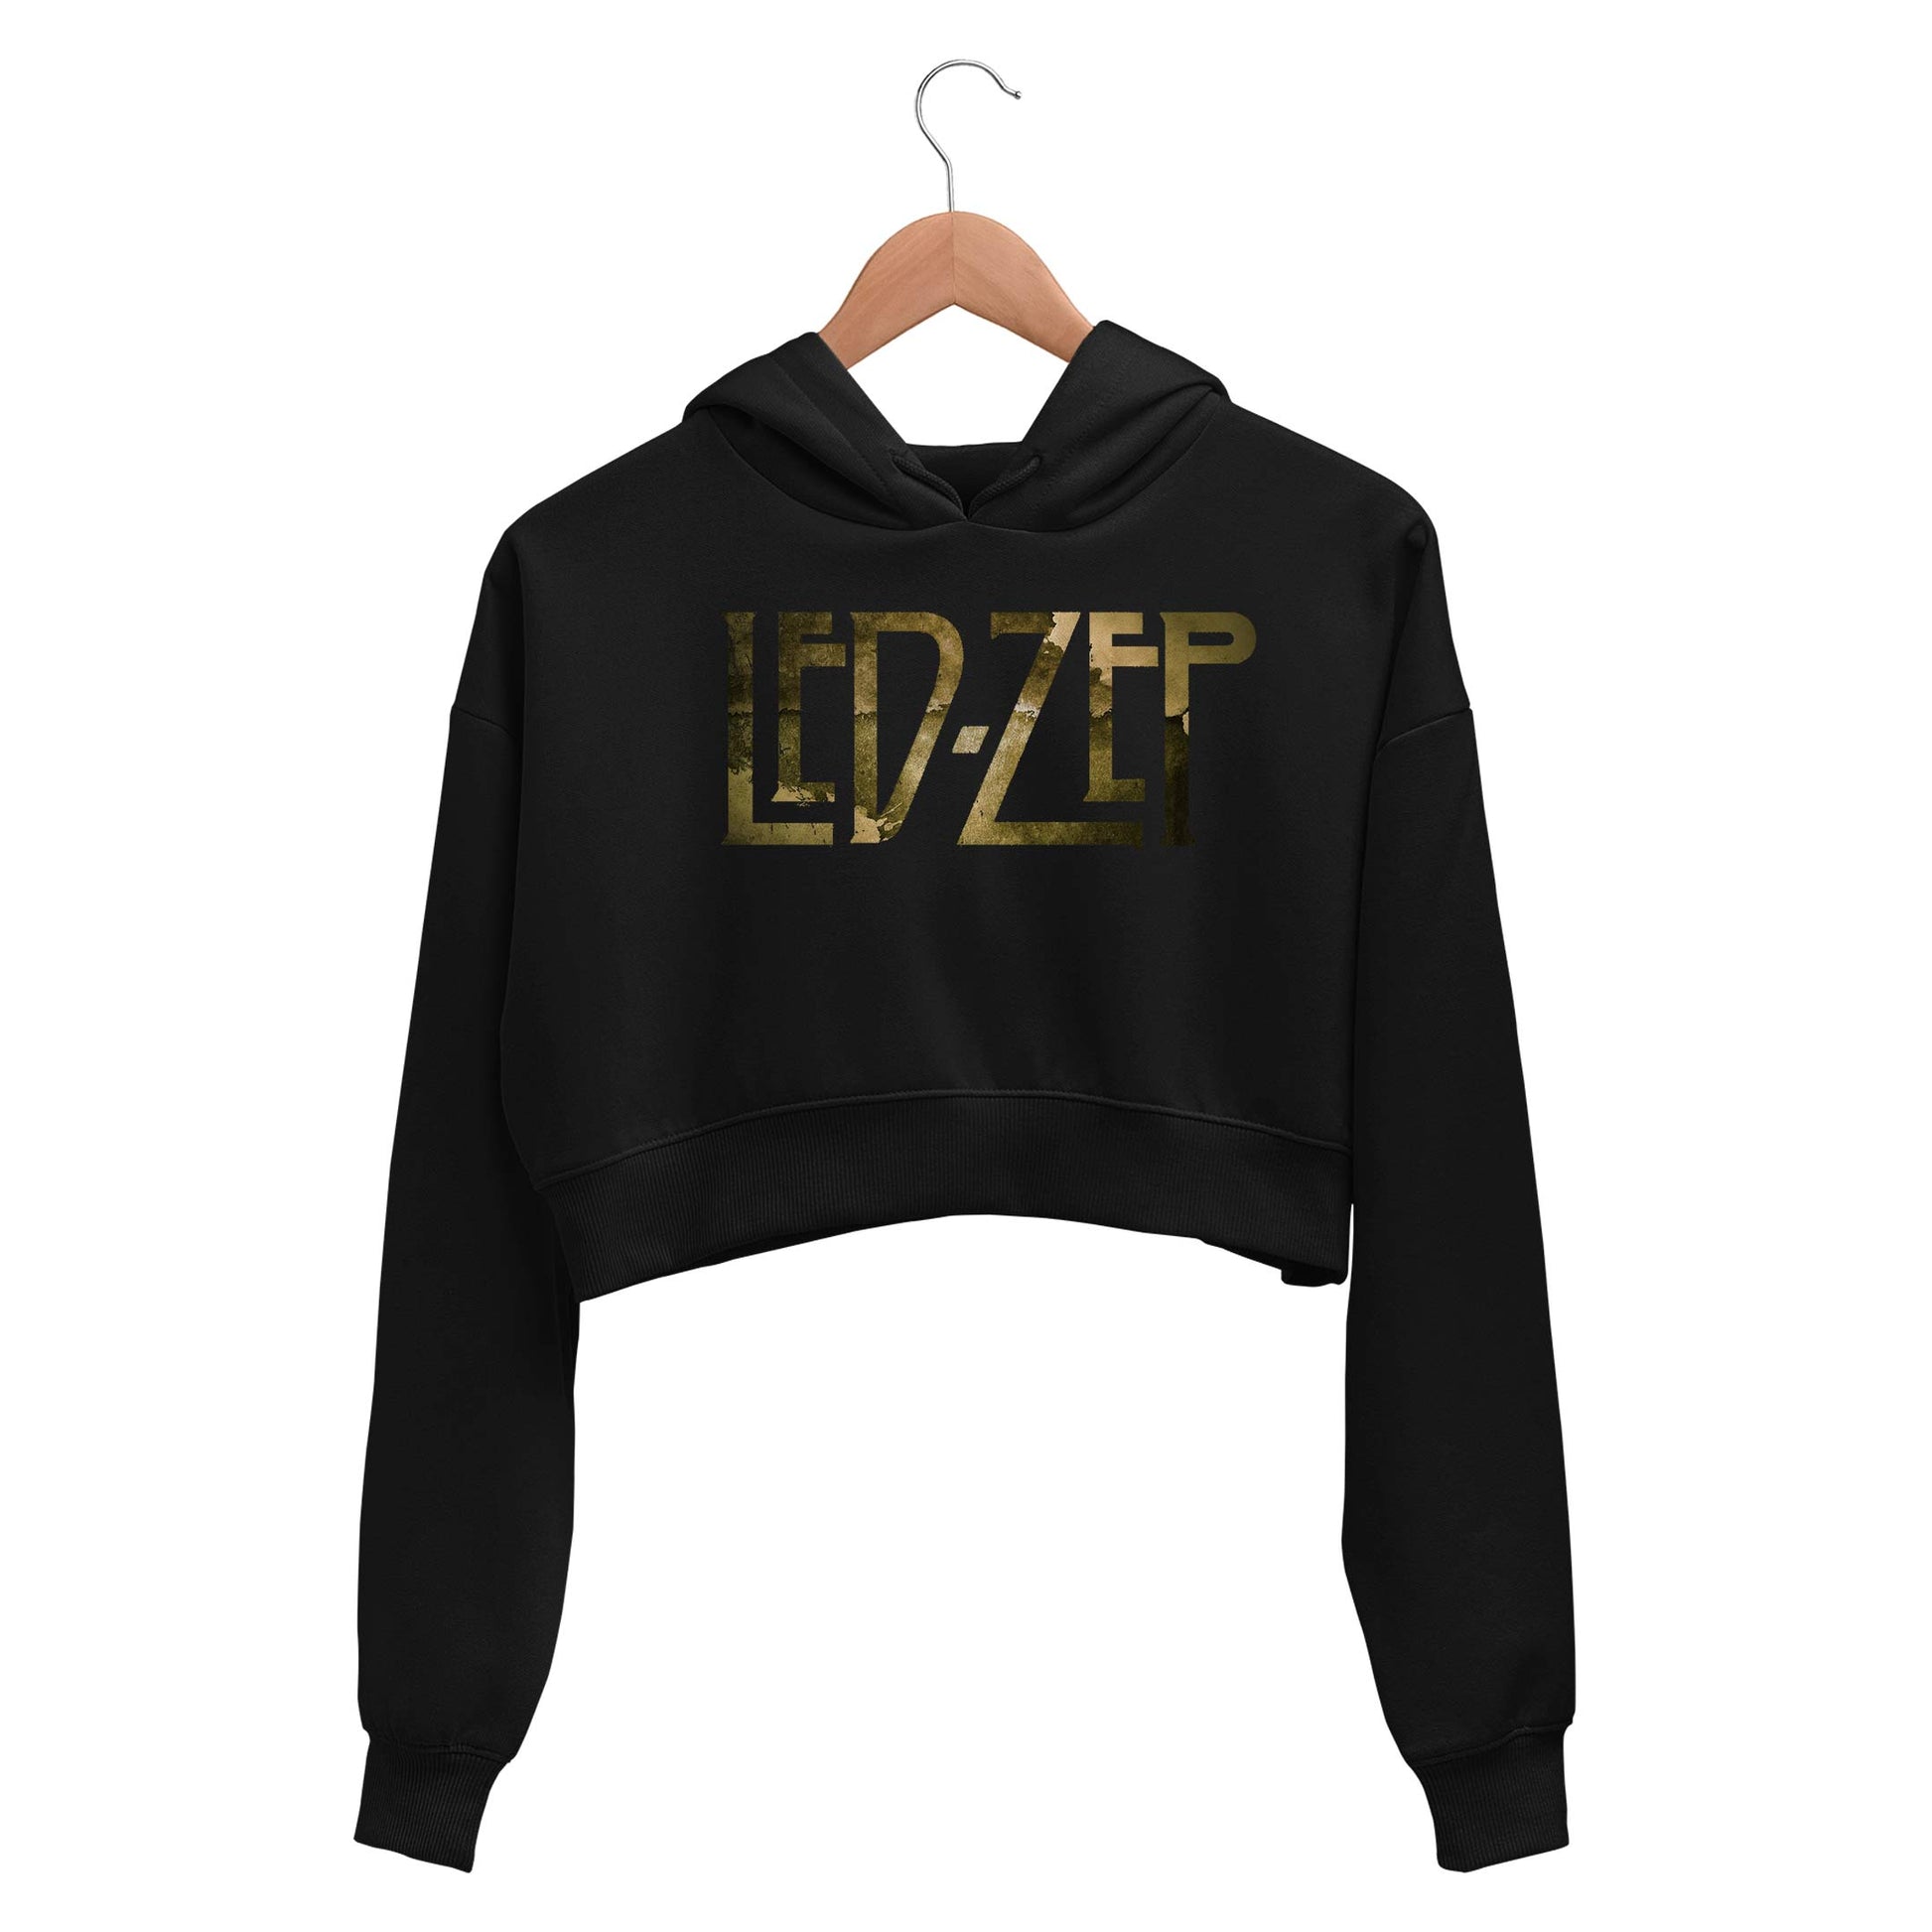 Led Zeppelin Crop Hoodie Crop Hooded Sweatshirt for Women The Banyan Tee TBT